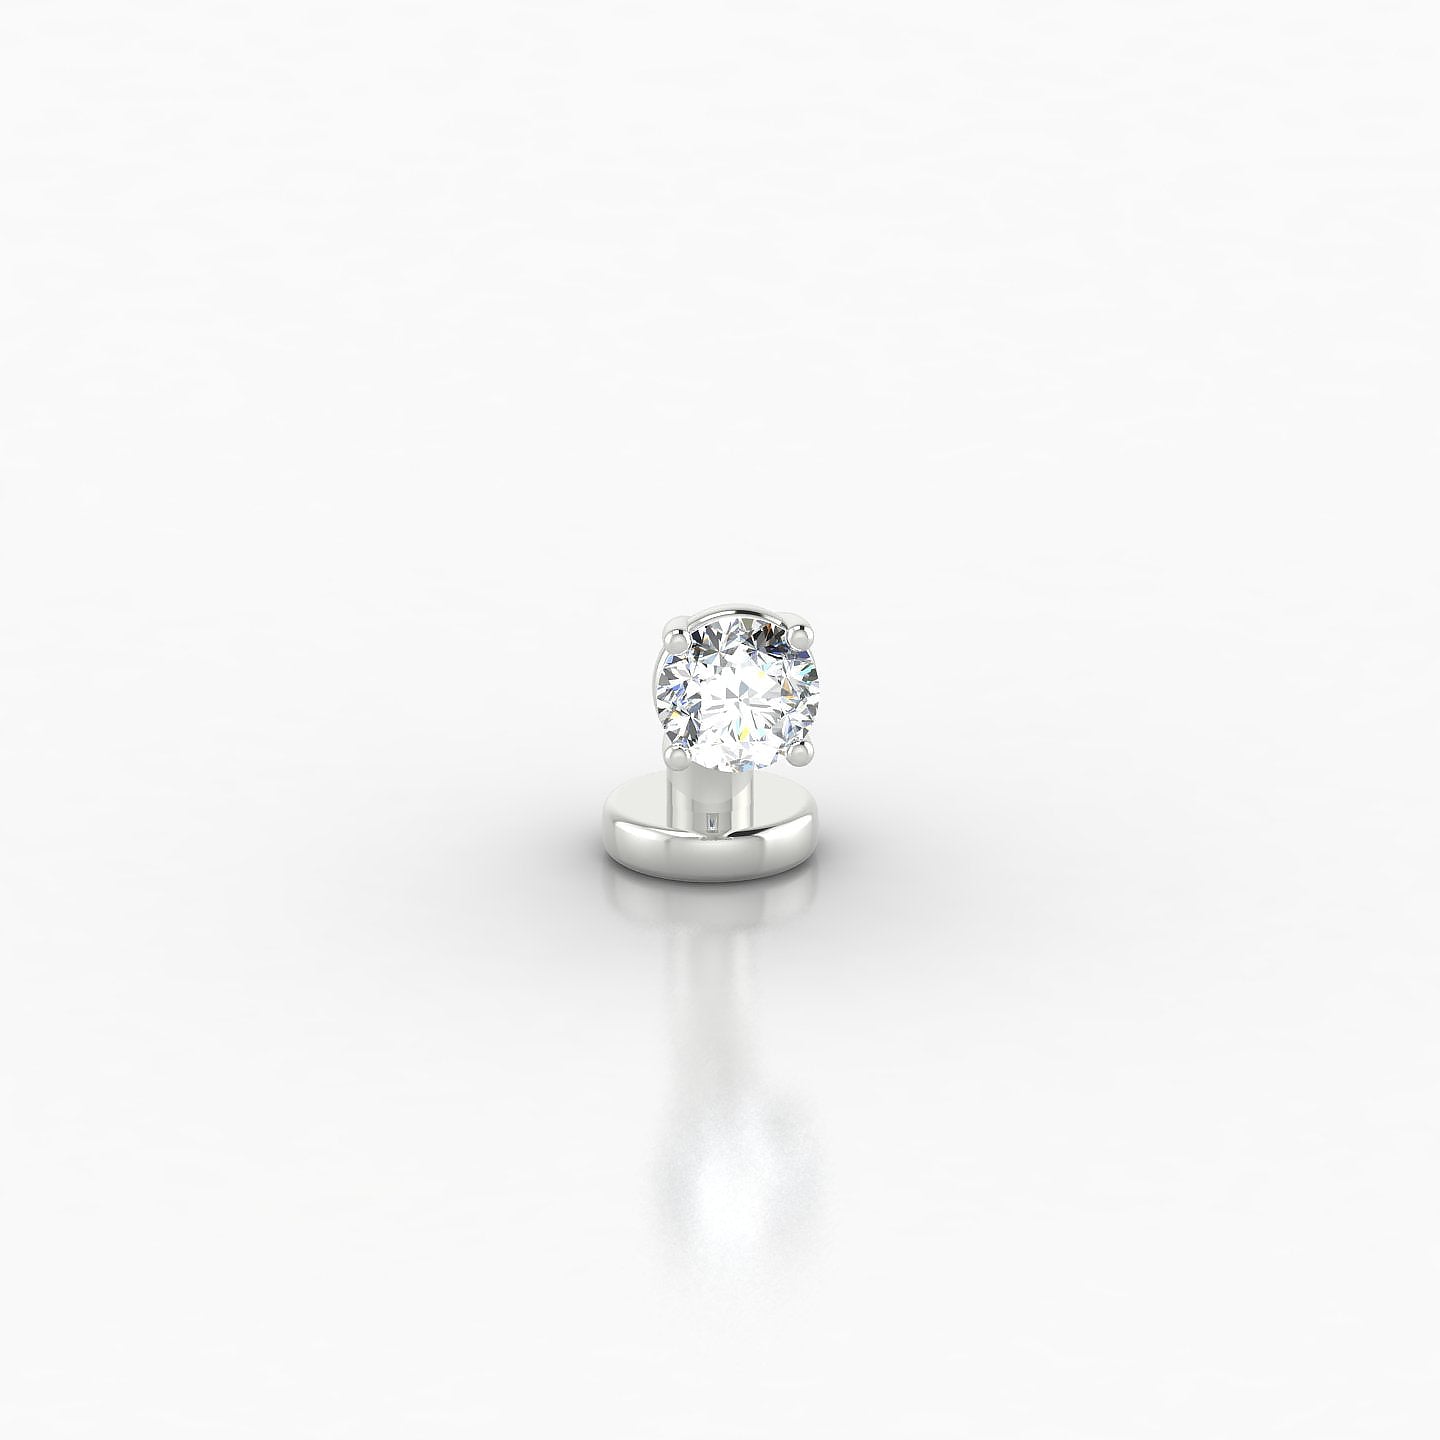 Nut | 18k White Gold 6 mm 3 mm Round Diamond Floating Navel Piercing